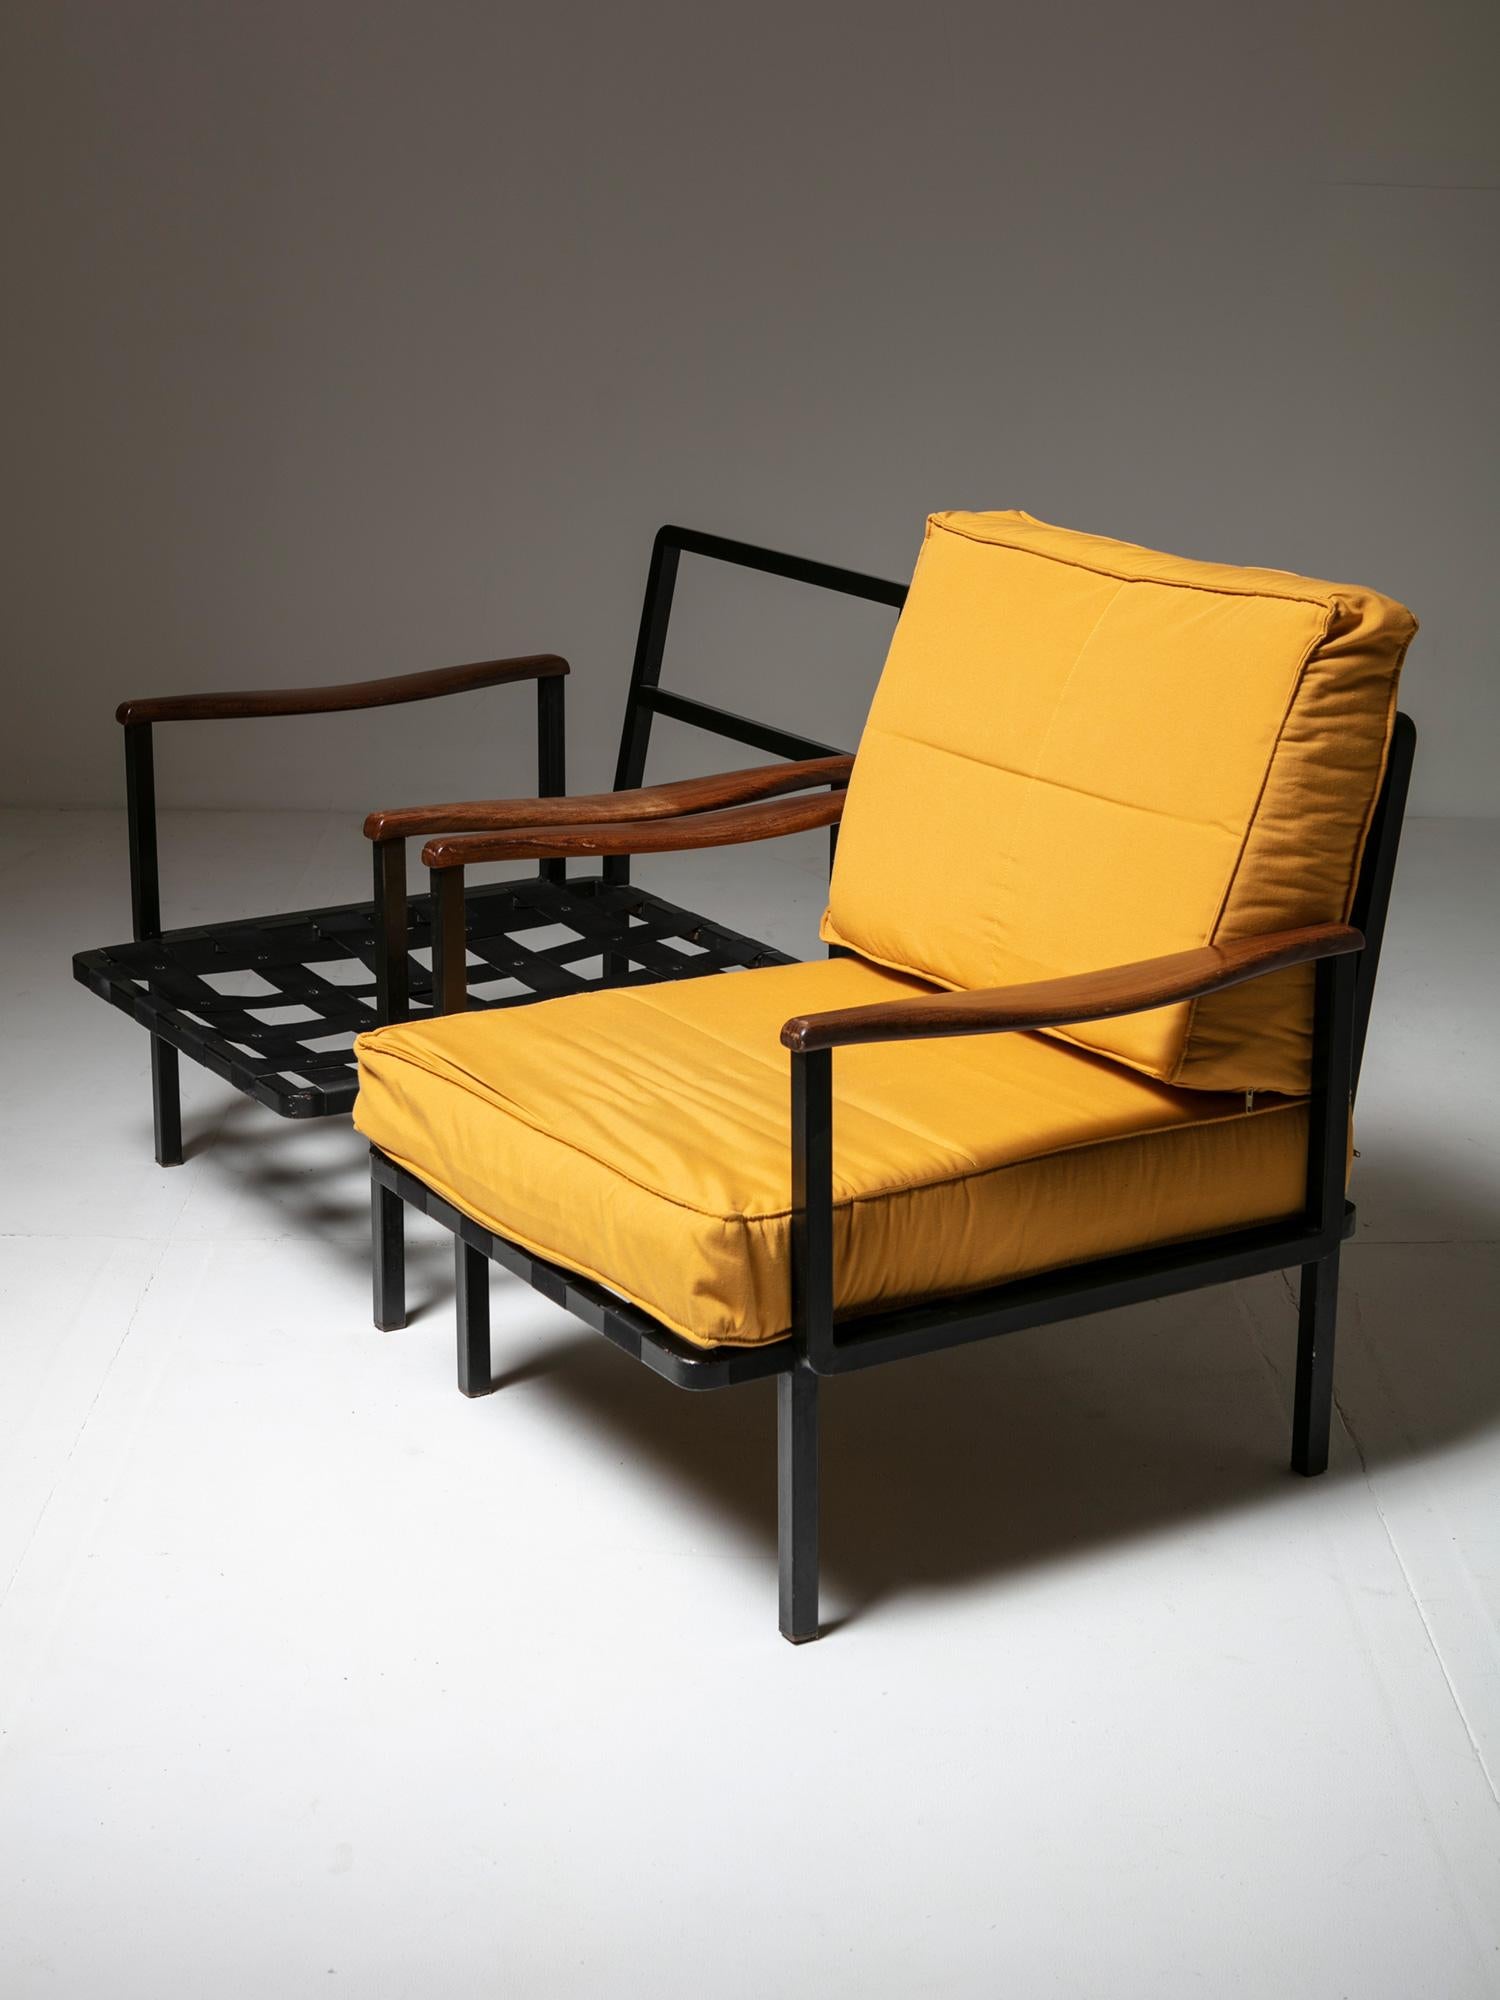 Lounge chairs model P24 by Osvaldo Borsani for Tecno.
Surprising combination of sleek wood armrests on metal frame.